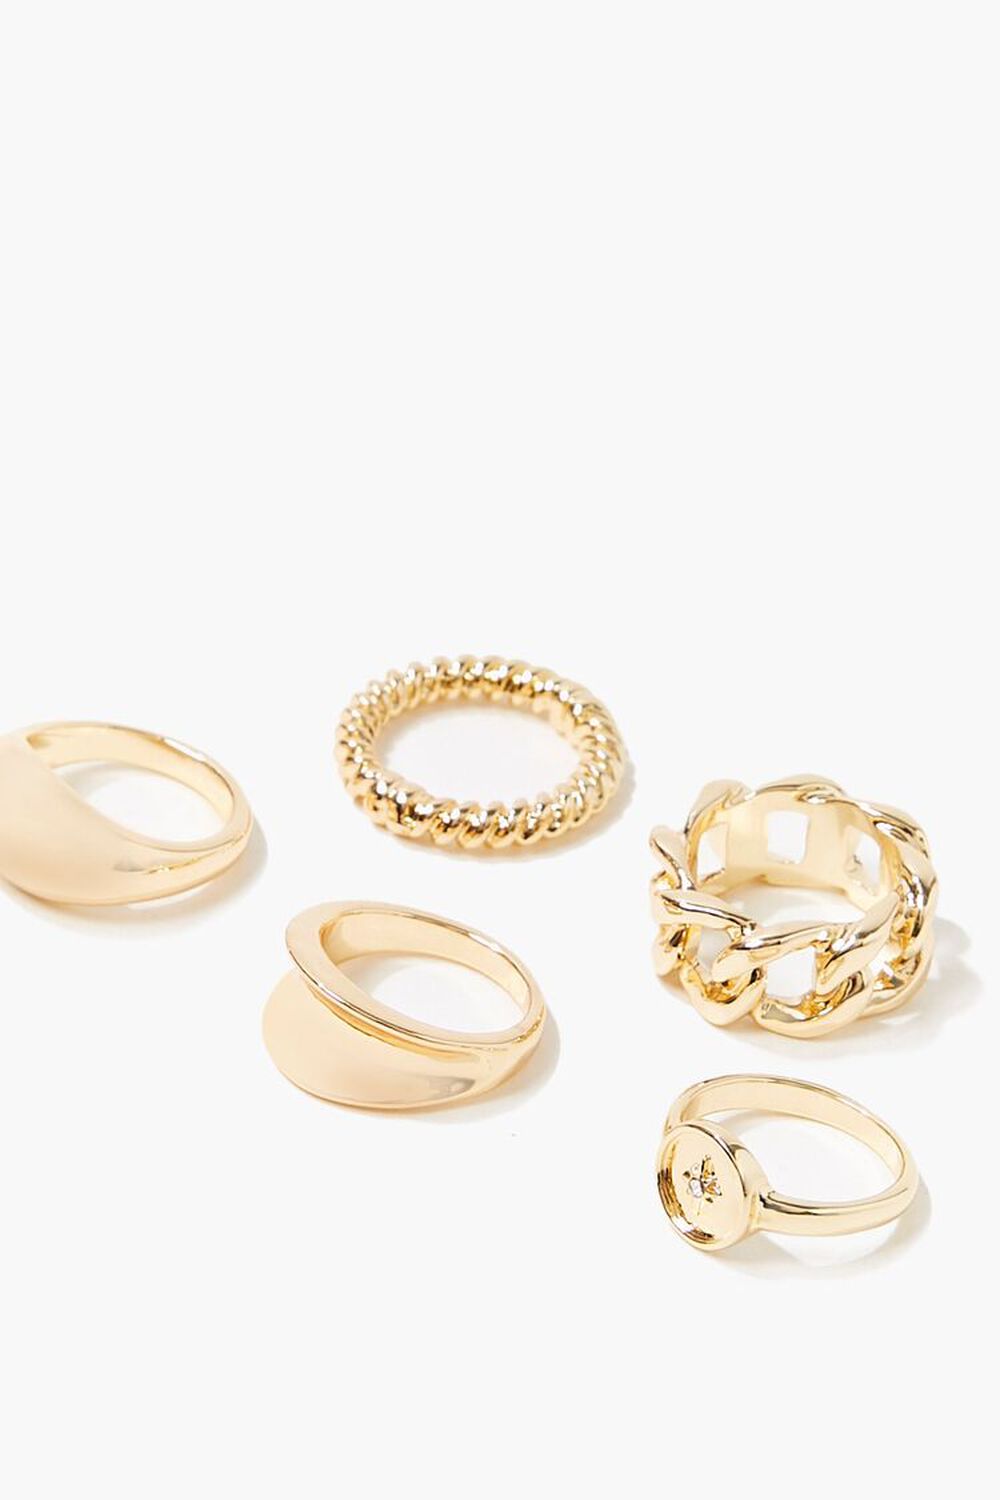 GOLD High-Polish Ring Set, image 2